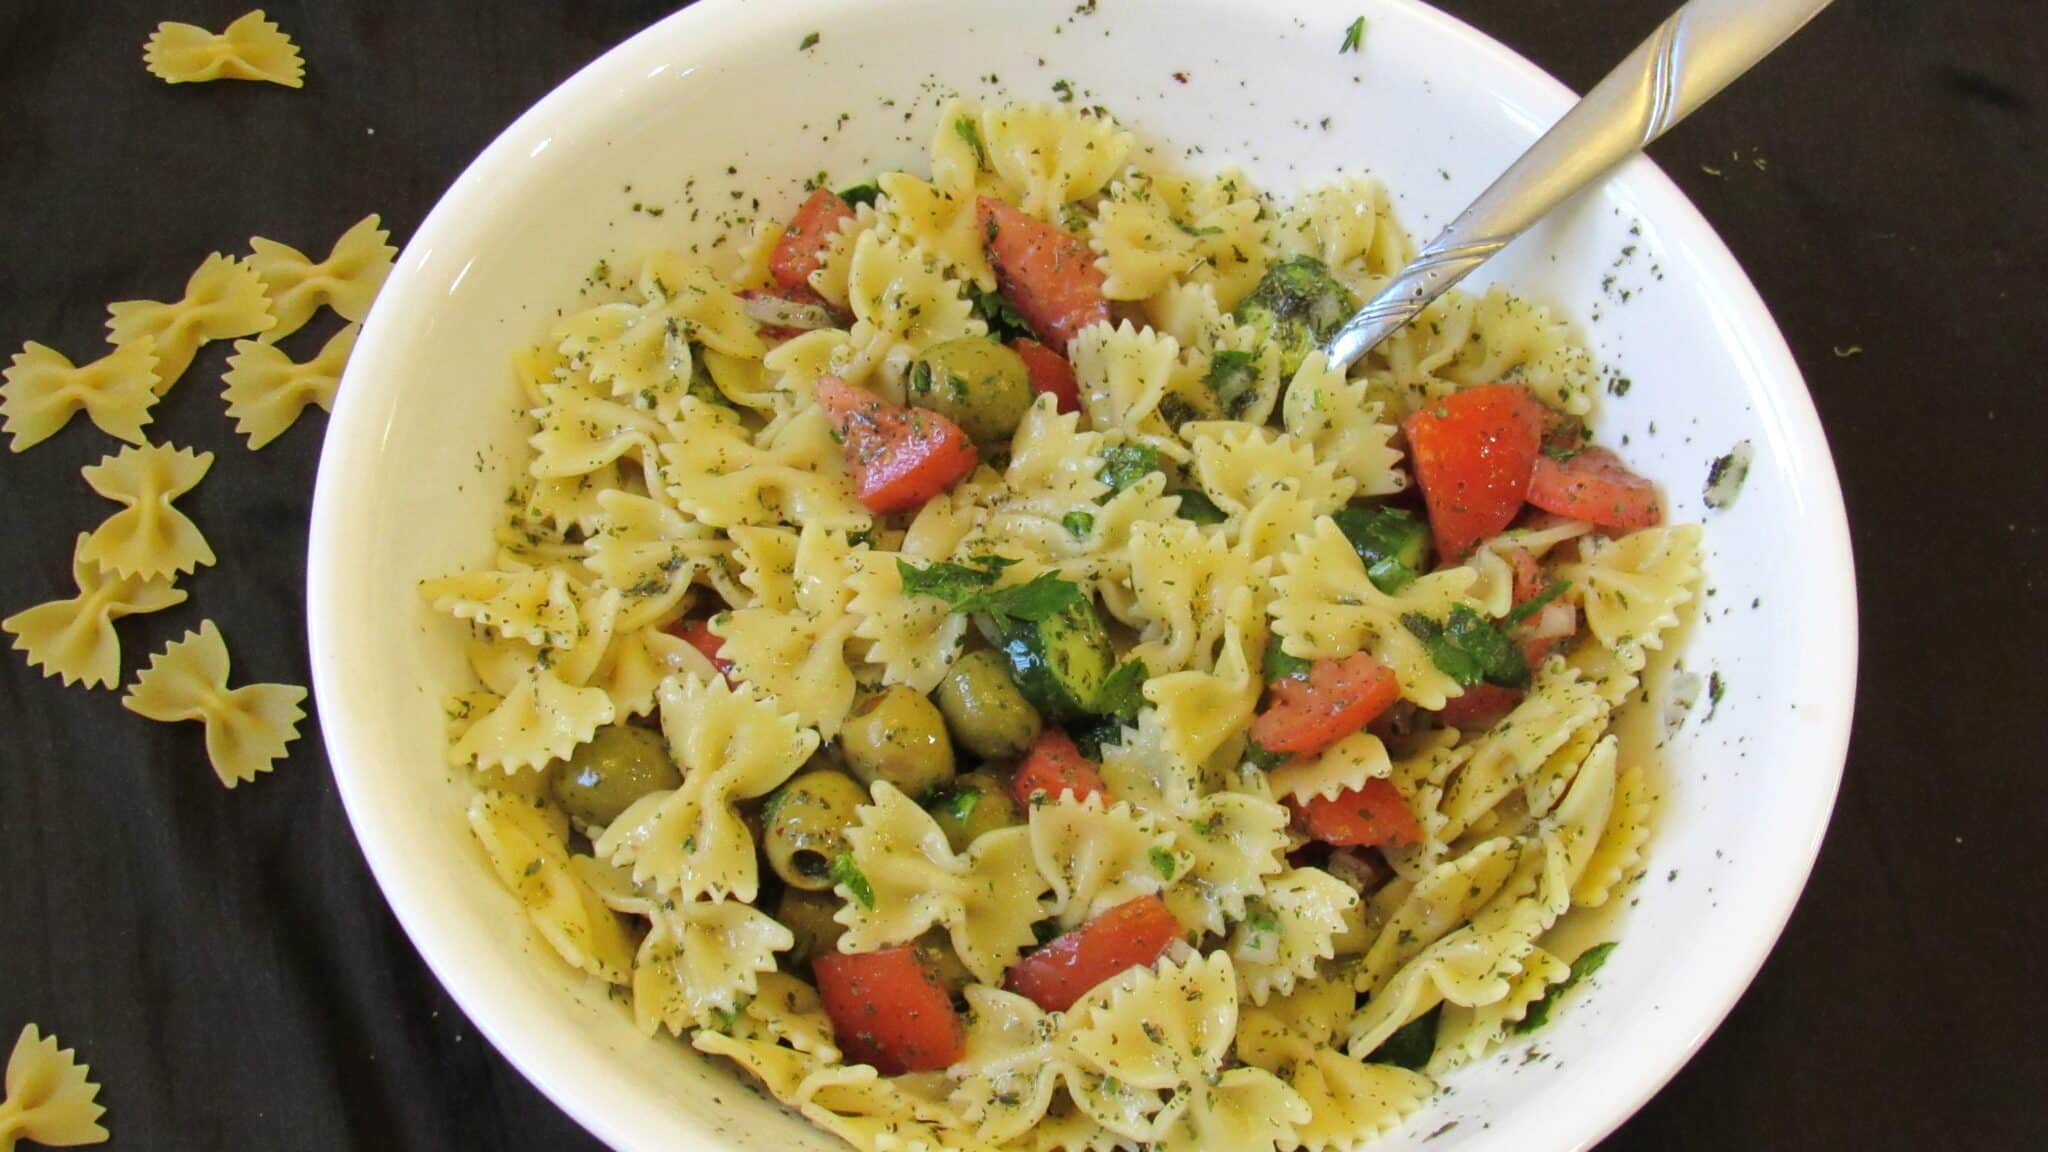 vegan veggies farfalle pasta in olive oil is served in a white bowl.